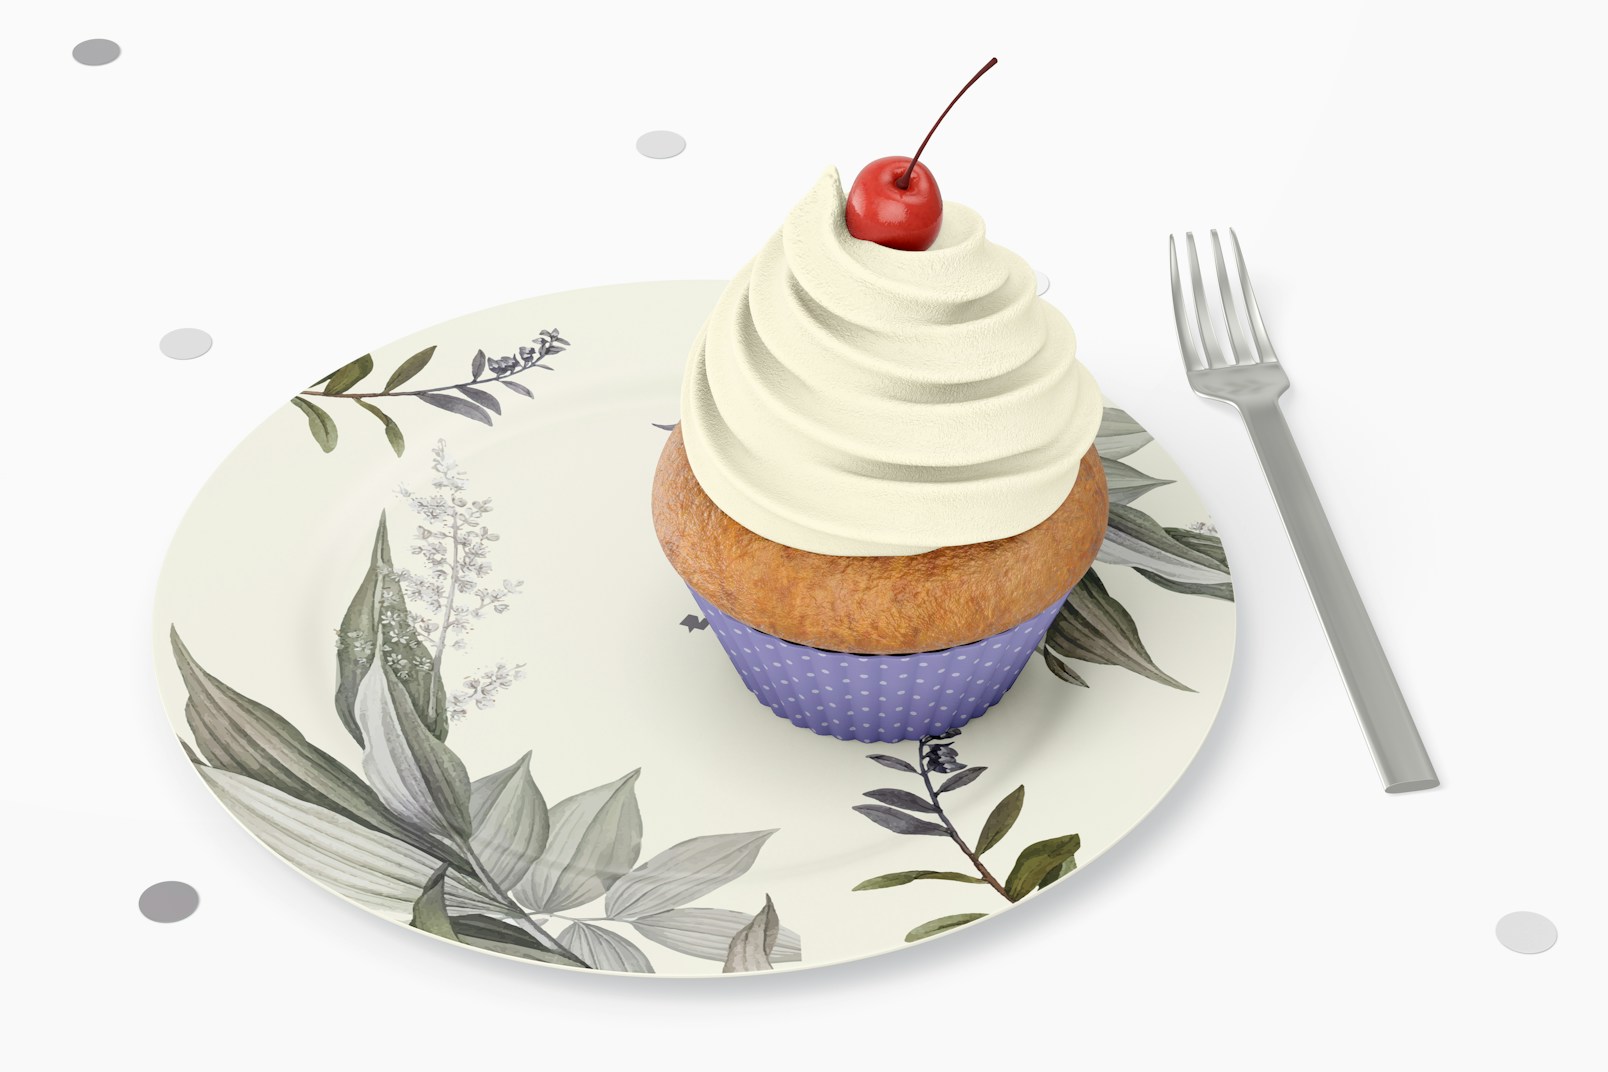 Round Dessert Plate with Cupcake Mockup